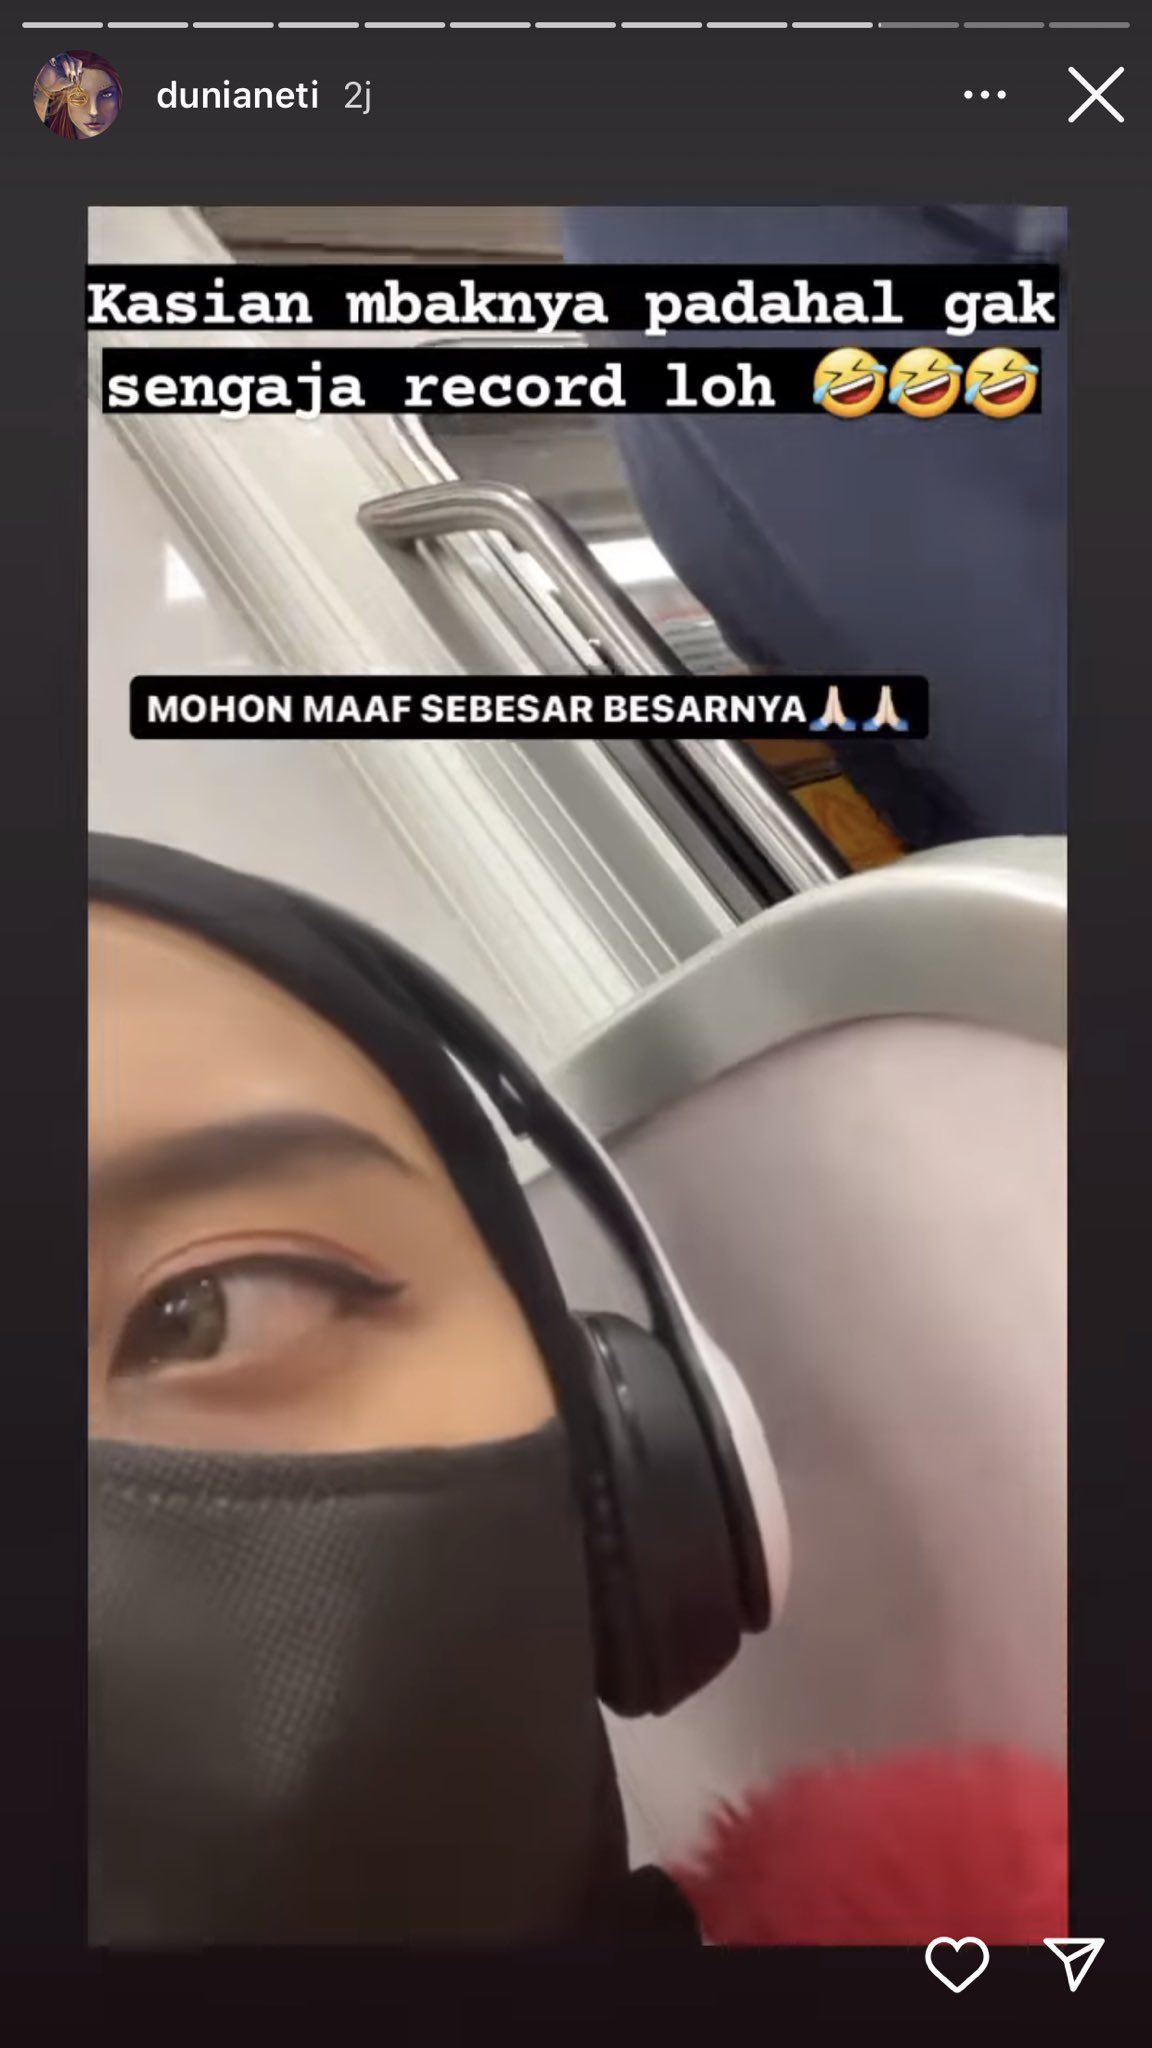 Sosok wanita yang merupakan fans Cipung (anak Raffi Ahmad) membuat permintaan video maaf terkait video yang tengah viral 